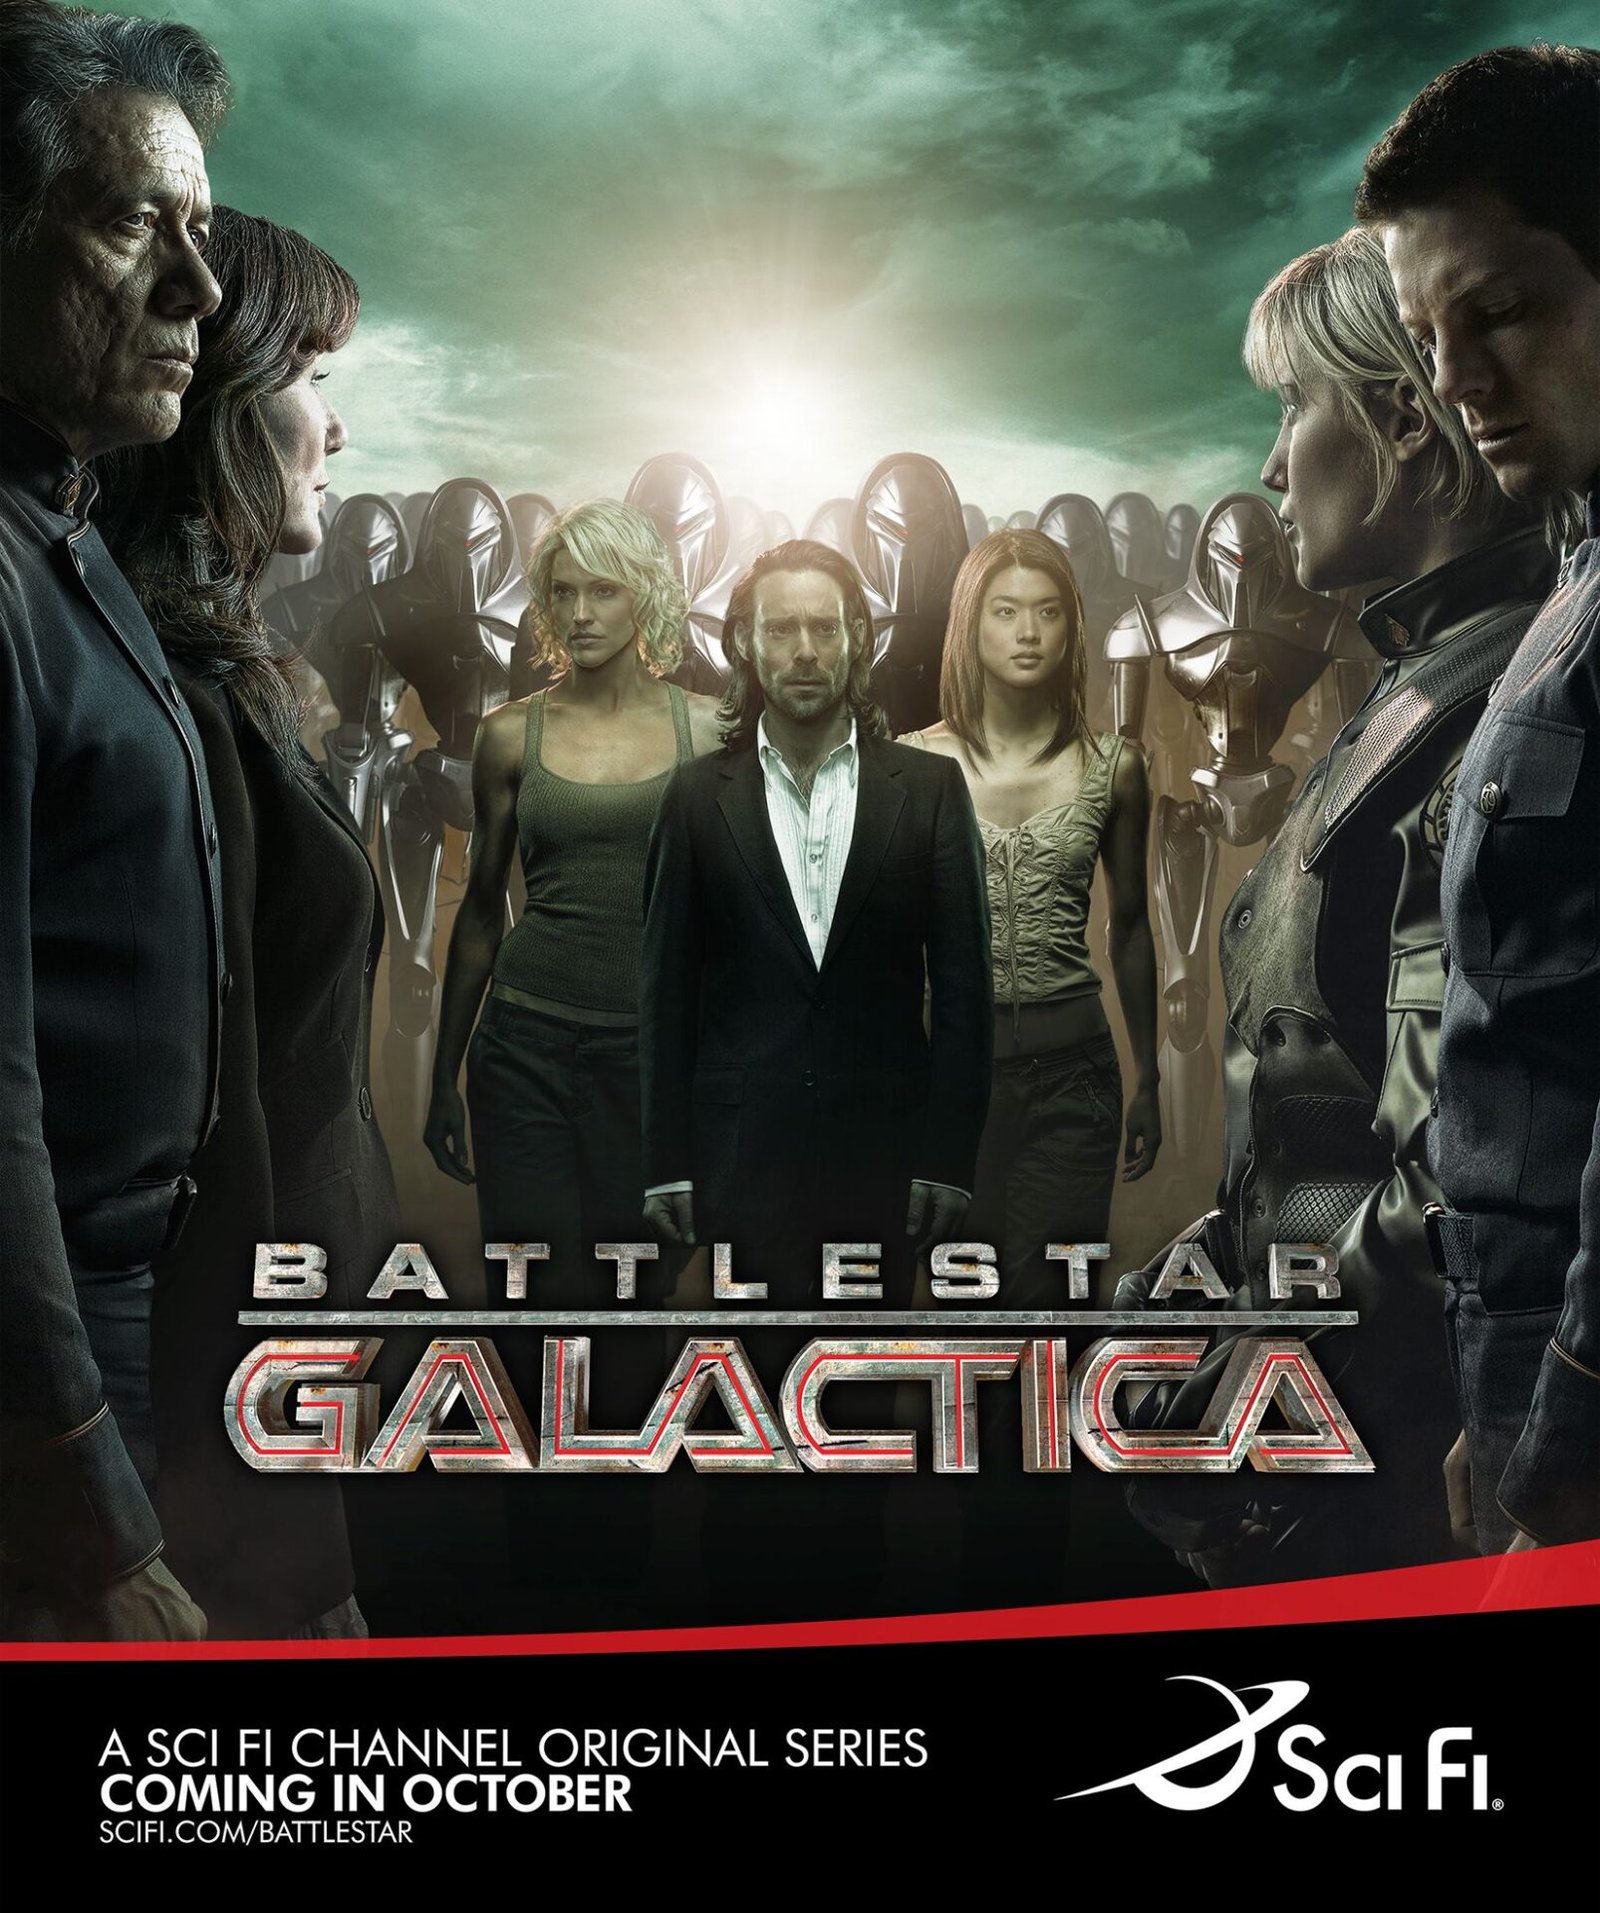 BATTLESTAR GALACTICA serie 2004 - BATTLESTAR GALACTICA | Filme do roteirista Simon Kinberg será ambientado no mesmo universo da nova série de TV